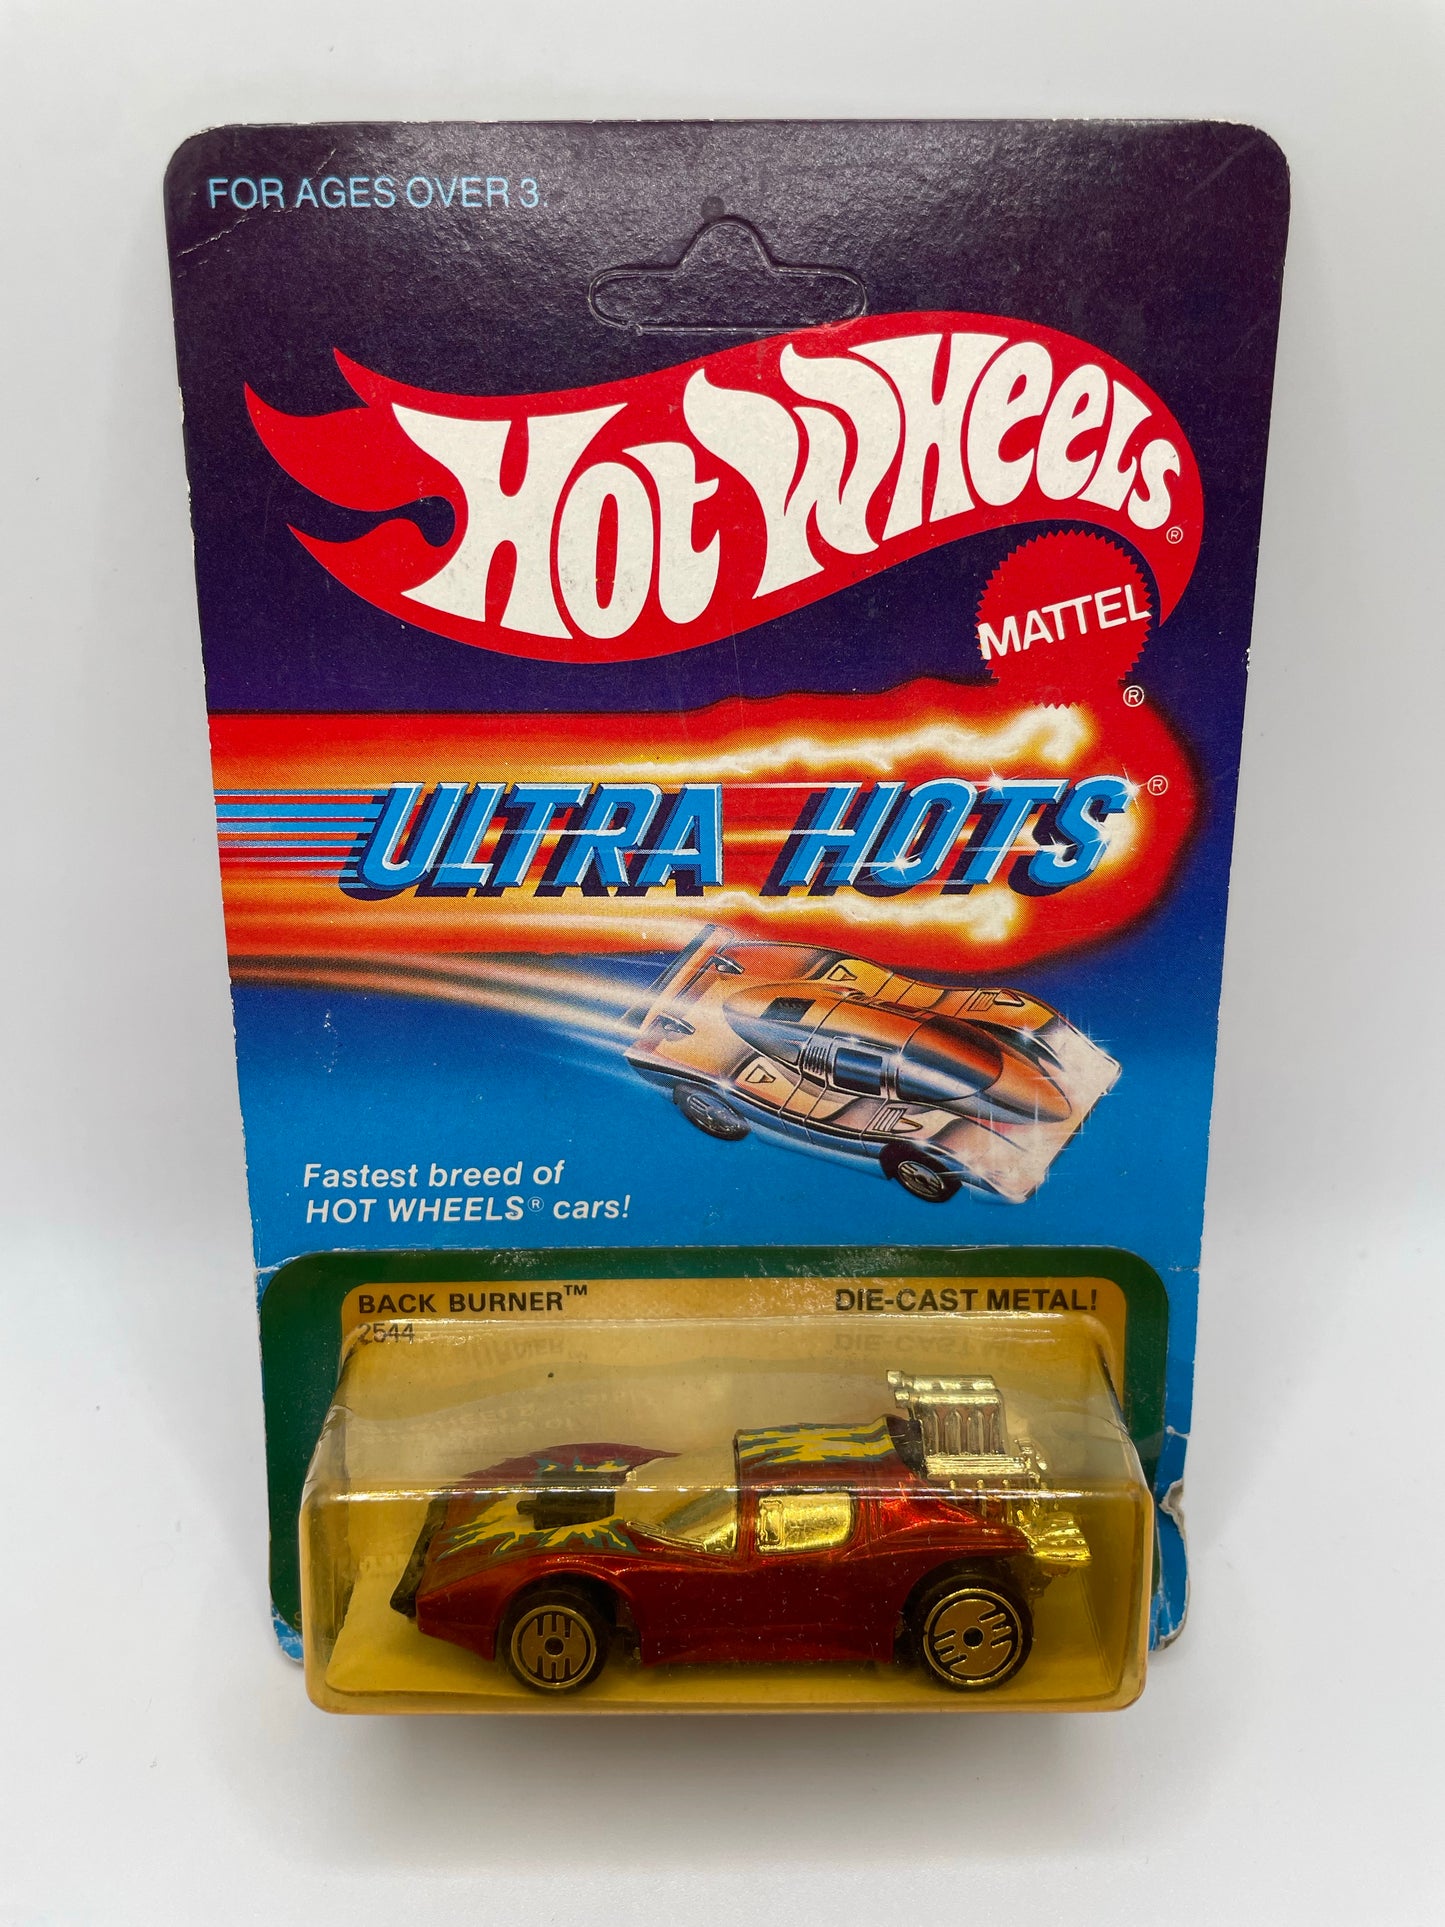 1983 Hot Wheels Ultra Hots Back Burner MOV